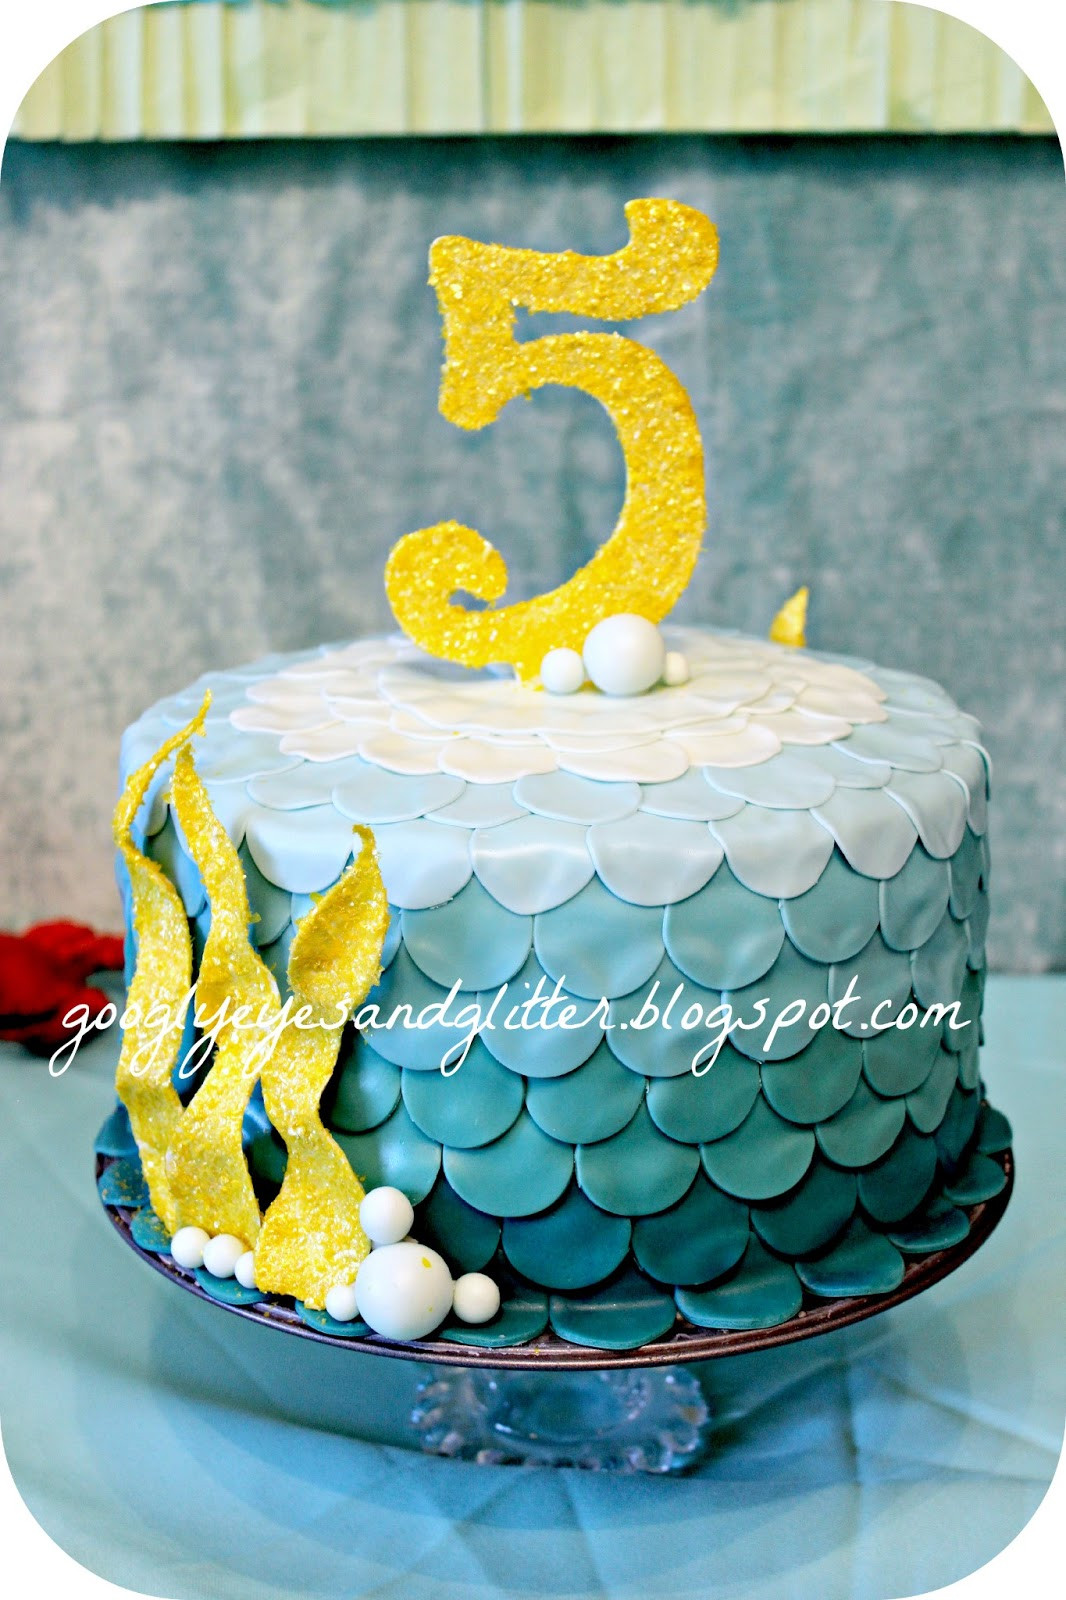 Under The Sea Birthday Cake
 Googly Eyes & Glitter Under The Sea Mermaid Themed